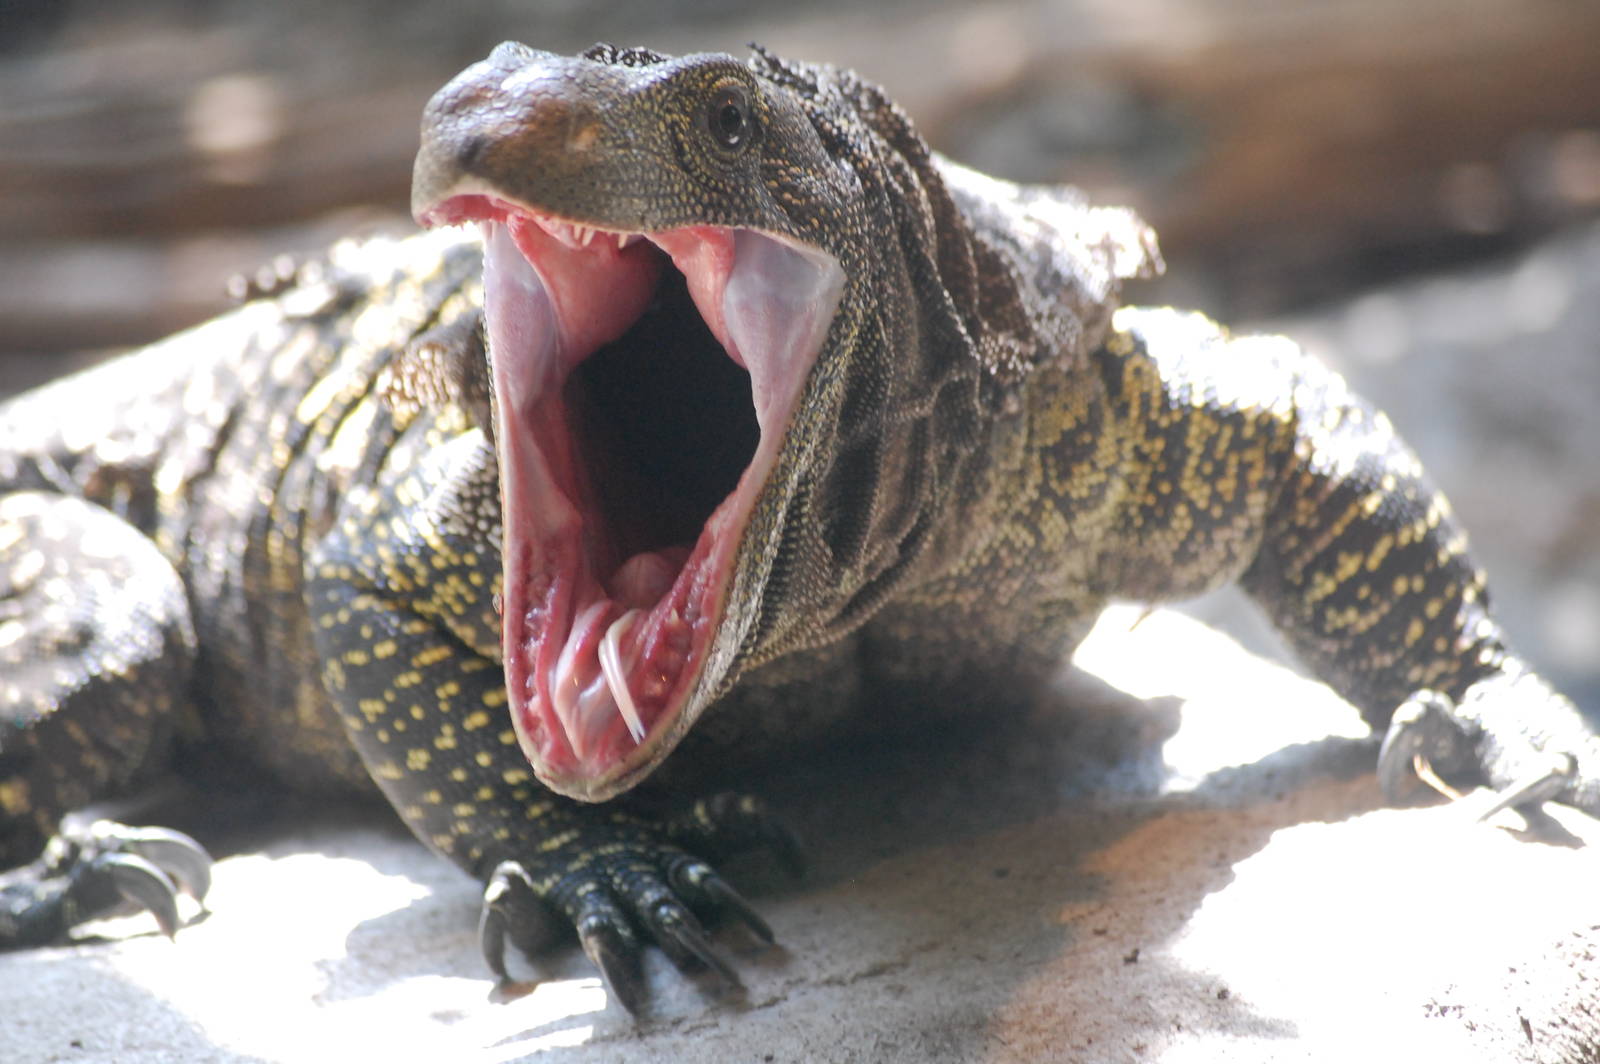 James Zaworski's Blog: The Longest Lizard in the World: The Crocodile